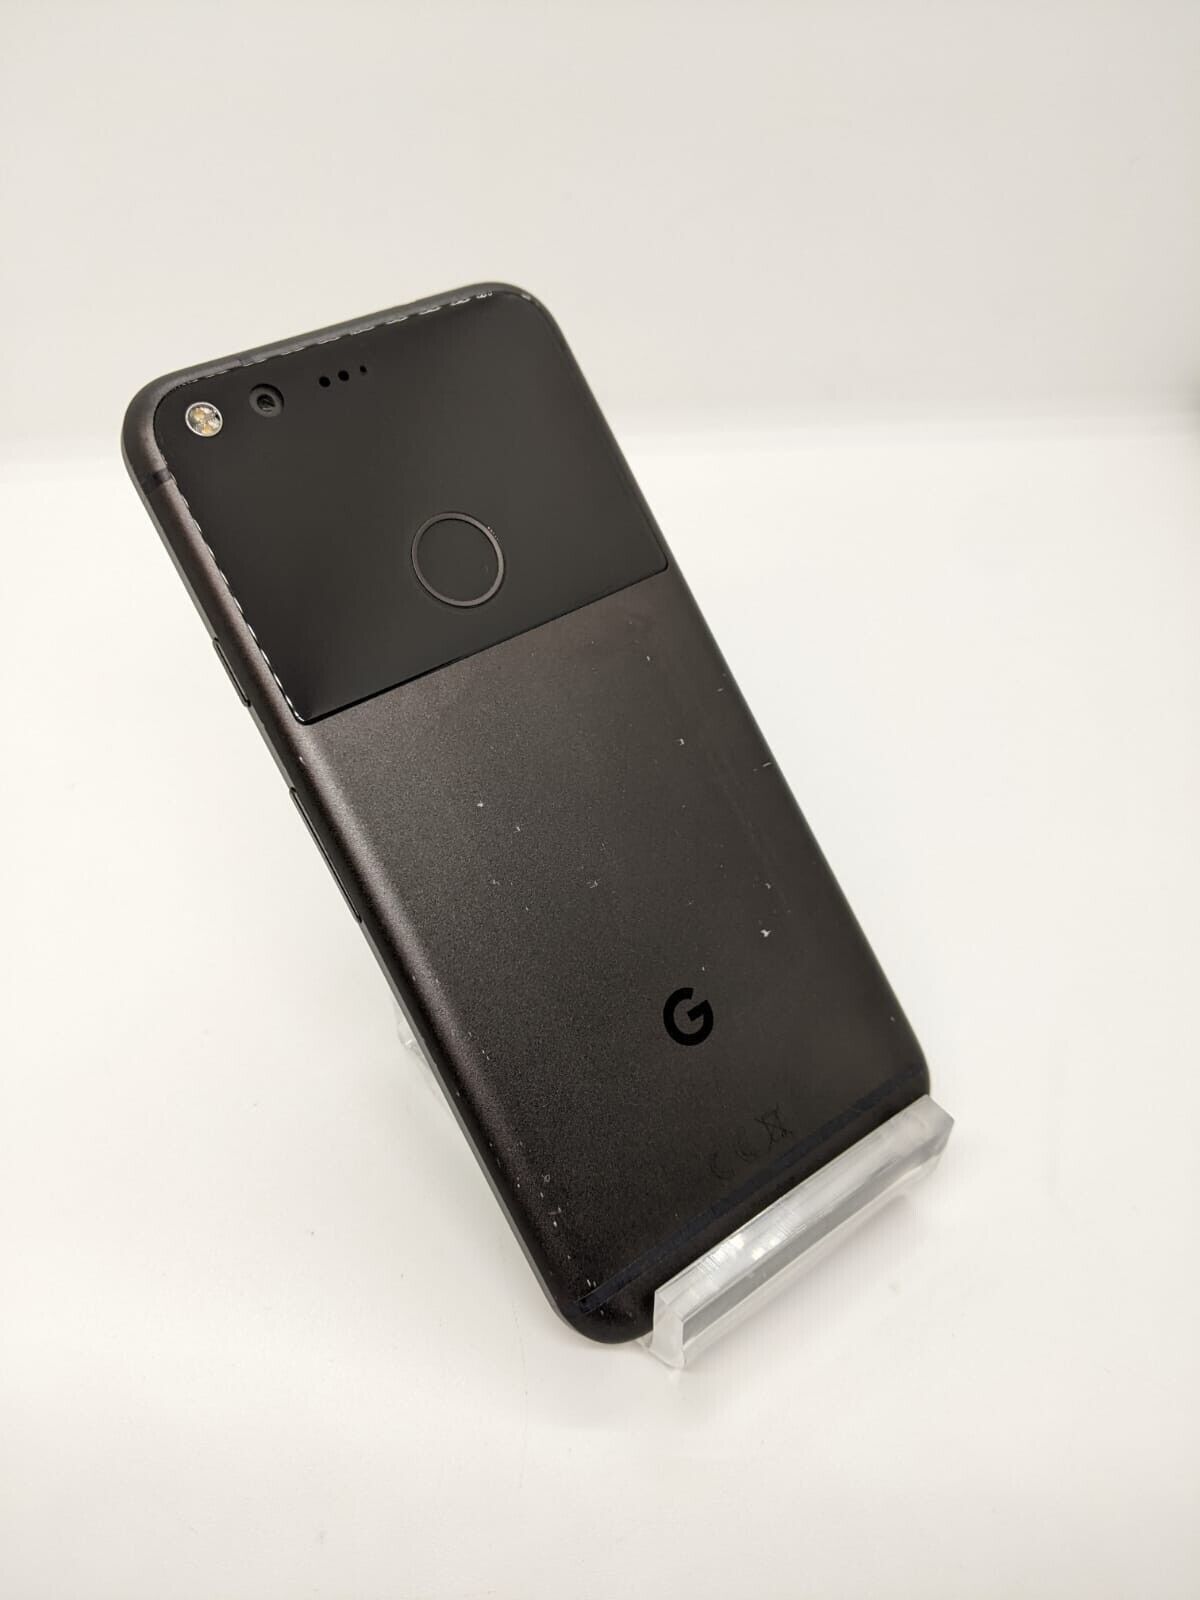 Google Pixel 128GB Unlocked Smartphone Unlockable Bootloader G-2PW4100 READ